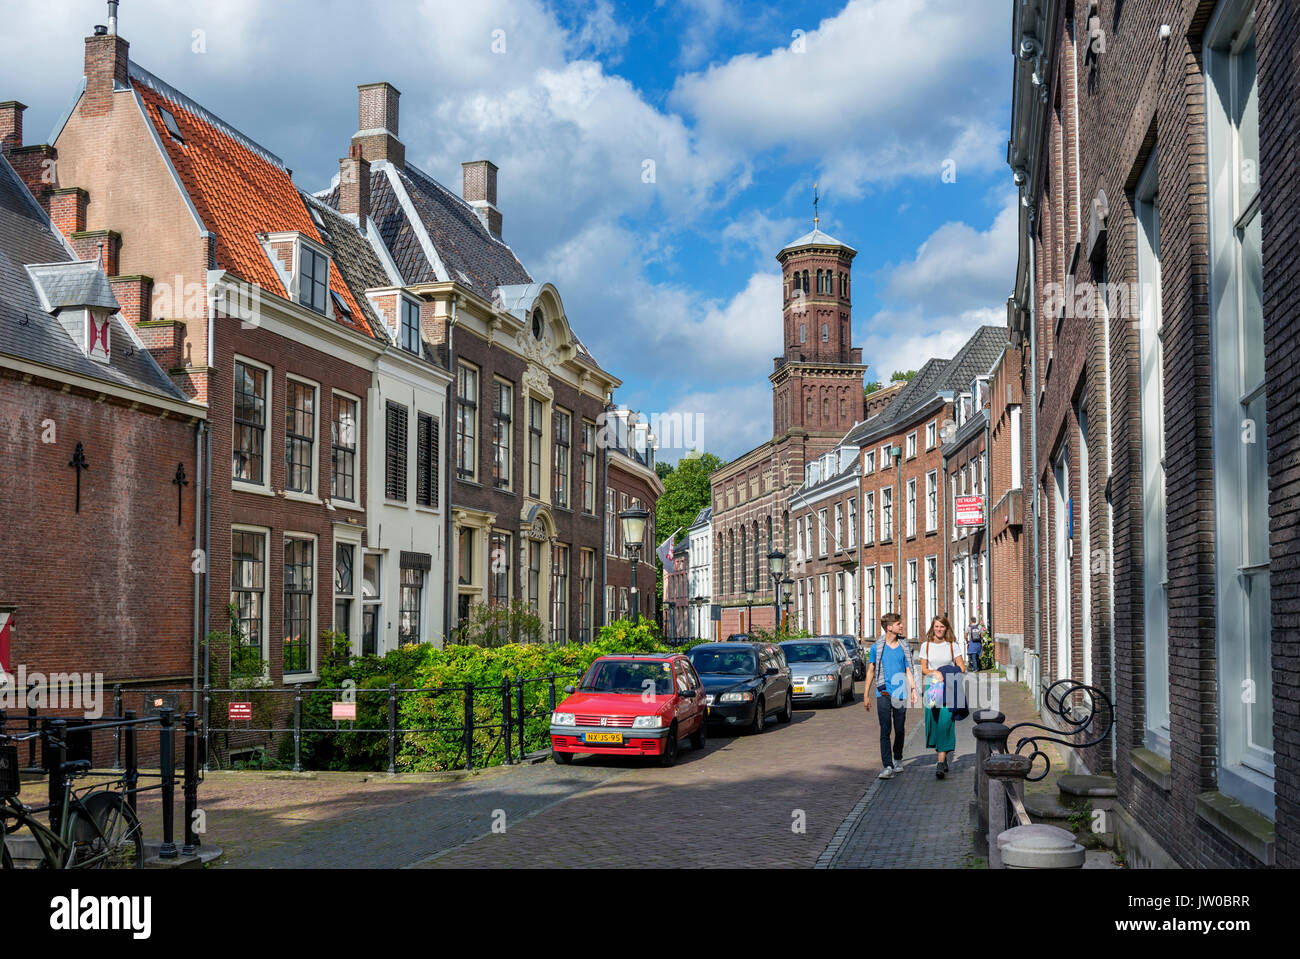 Kromme Nieuwegracht, a picturesque street in the historic city centre, Utrecht, Netherlands Stock Photo